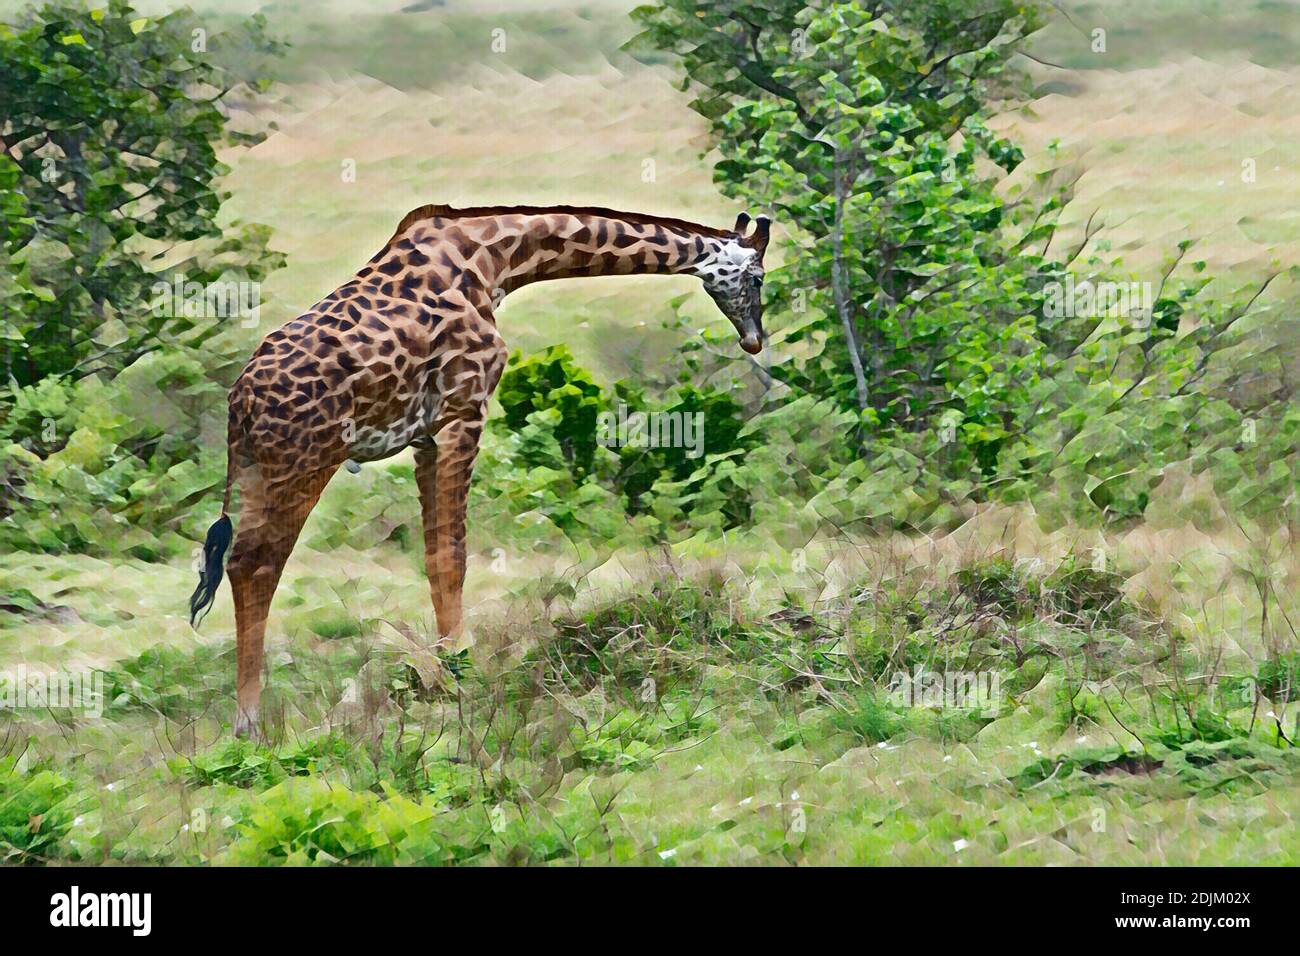 Afrique, Kenya, plaines du Serengeti du Nord, Maasai Mara. Girafe Masai mâle, alias Maasai ou Kilimanjaro girafe, la plus grande sous-espèce. Banque D'Images